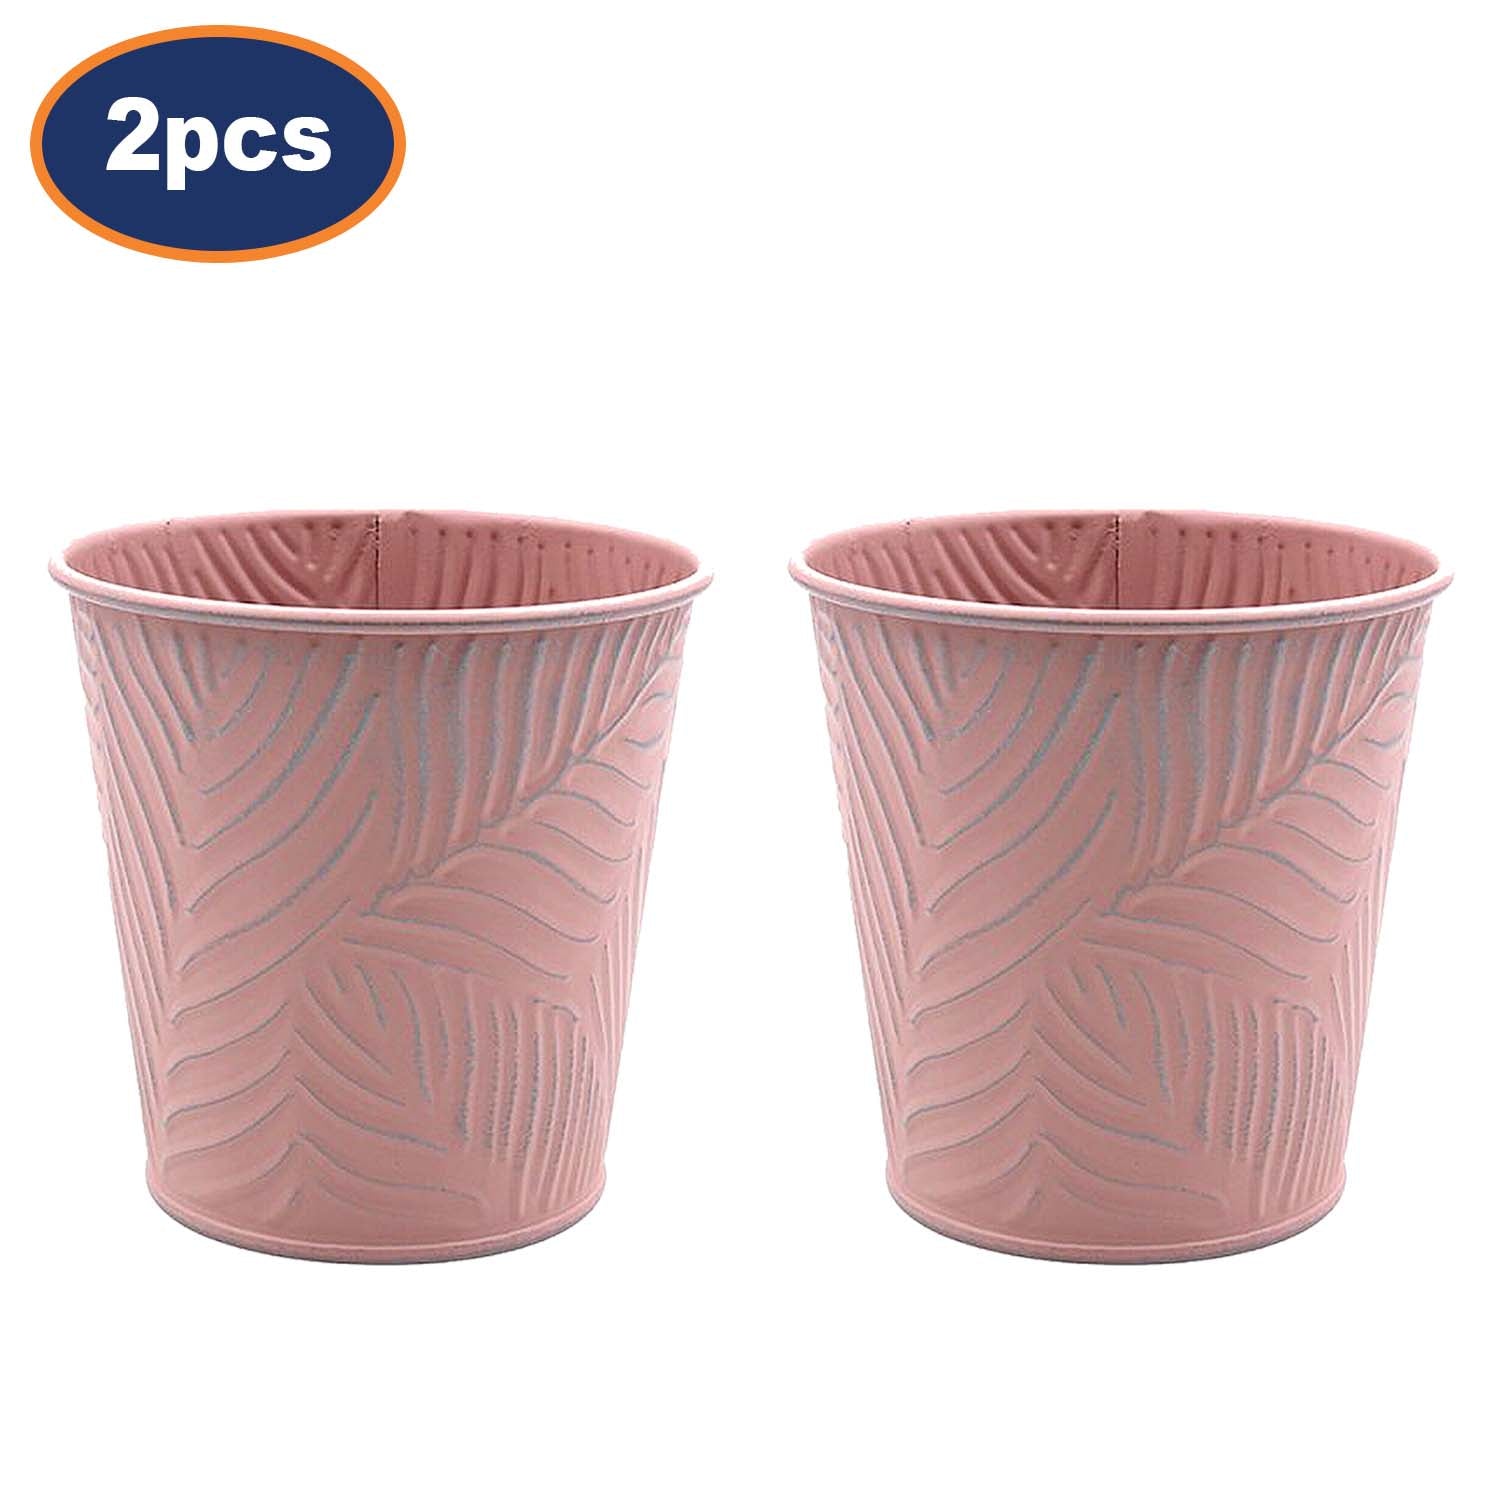 2Pcs 2.3L 16cm Pastel Pink Metal Planters